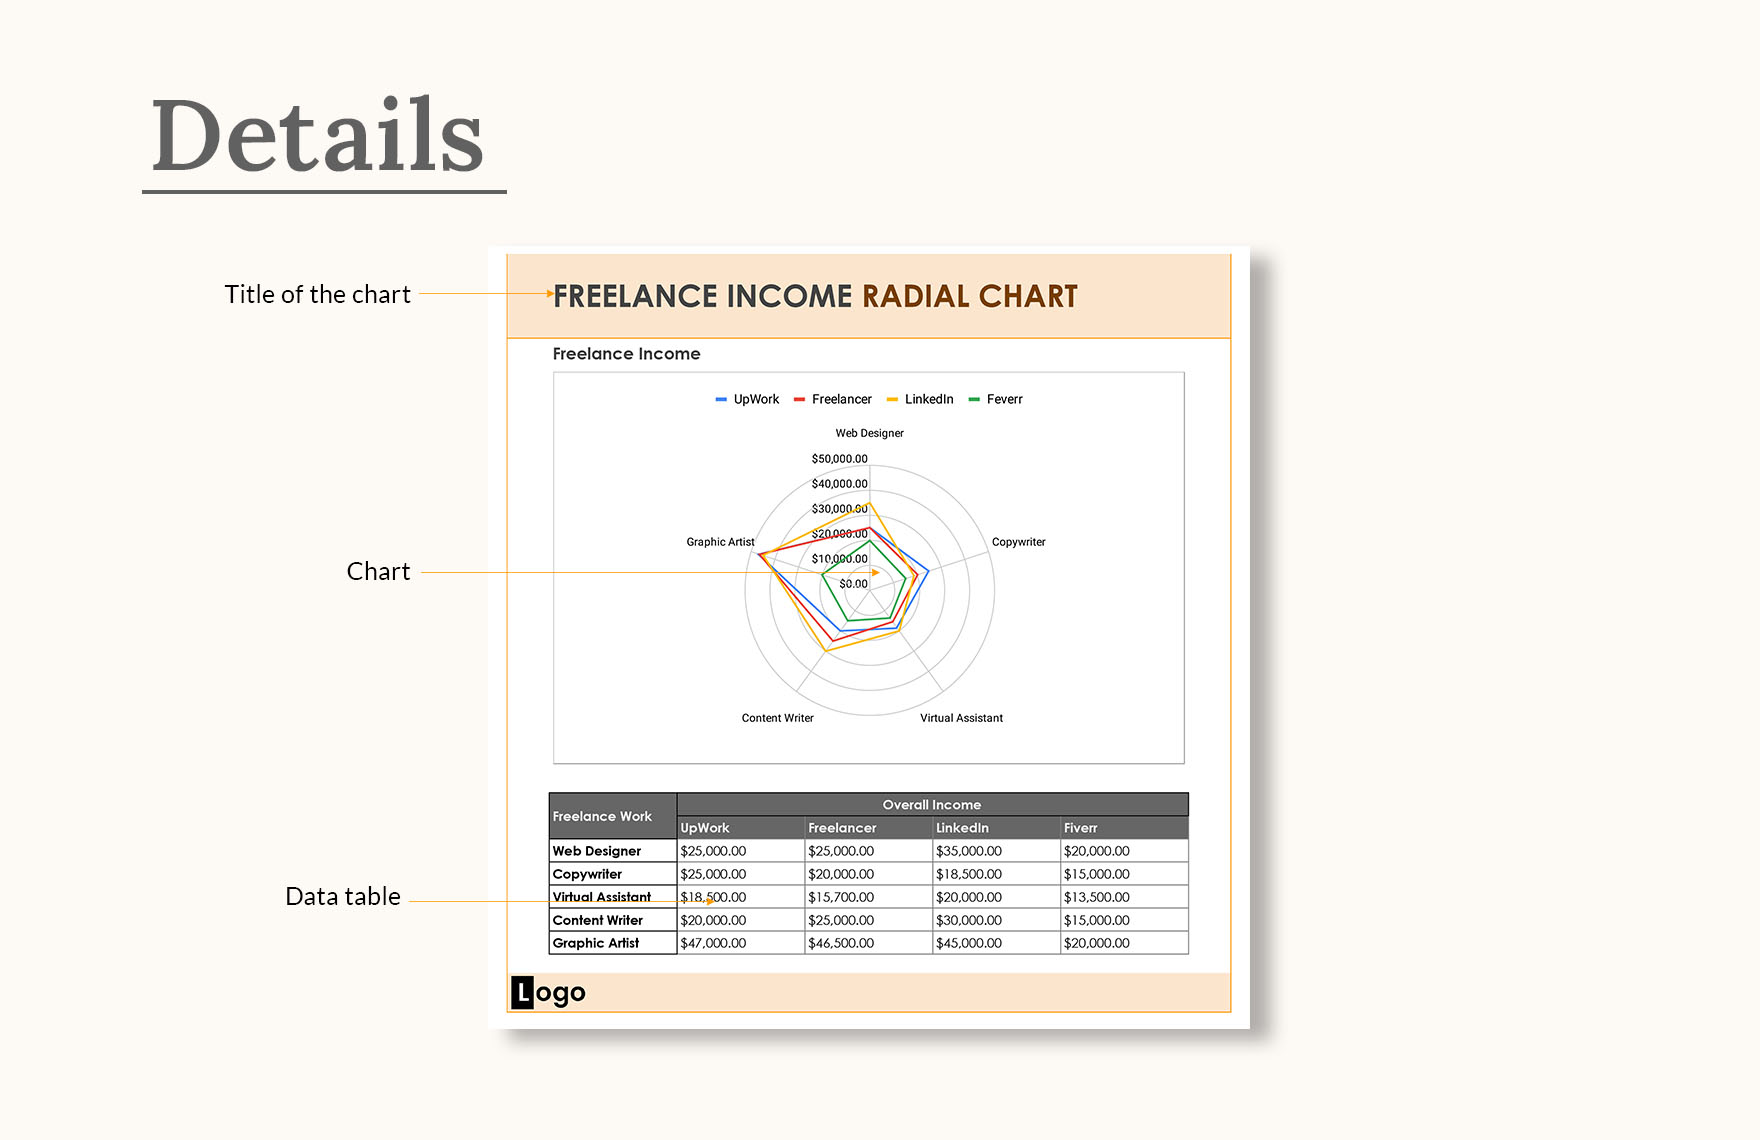 Freelance Income Radial Chart